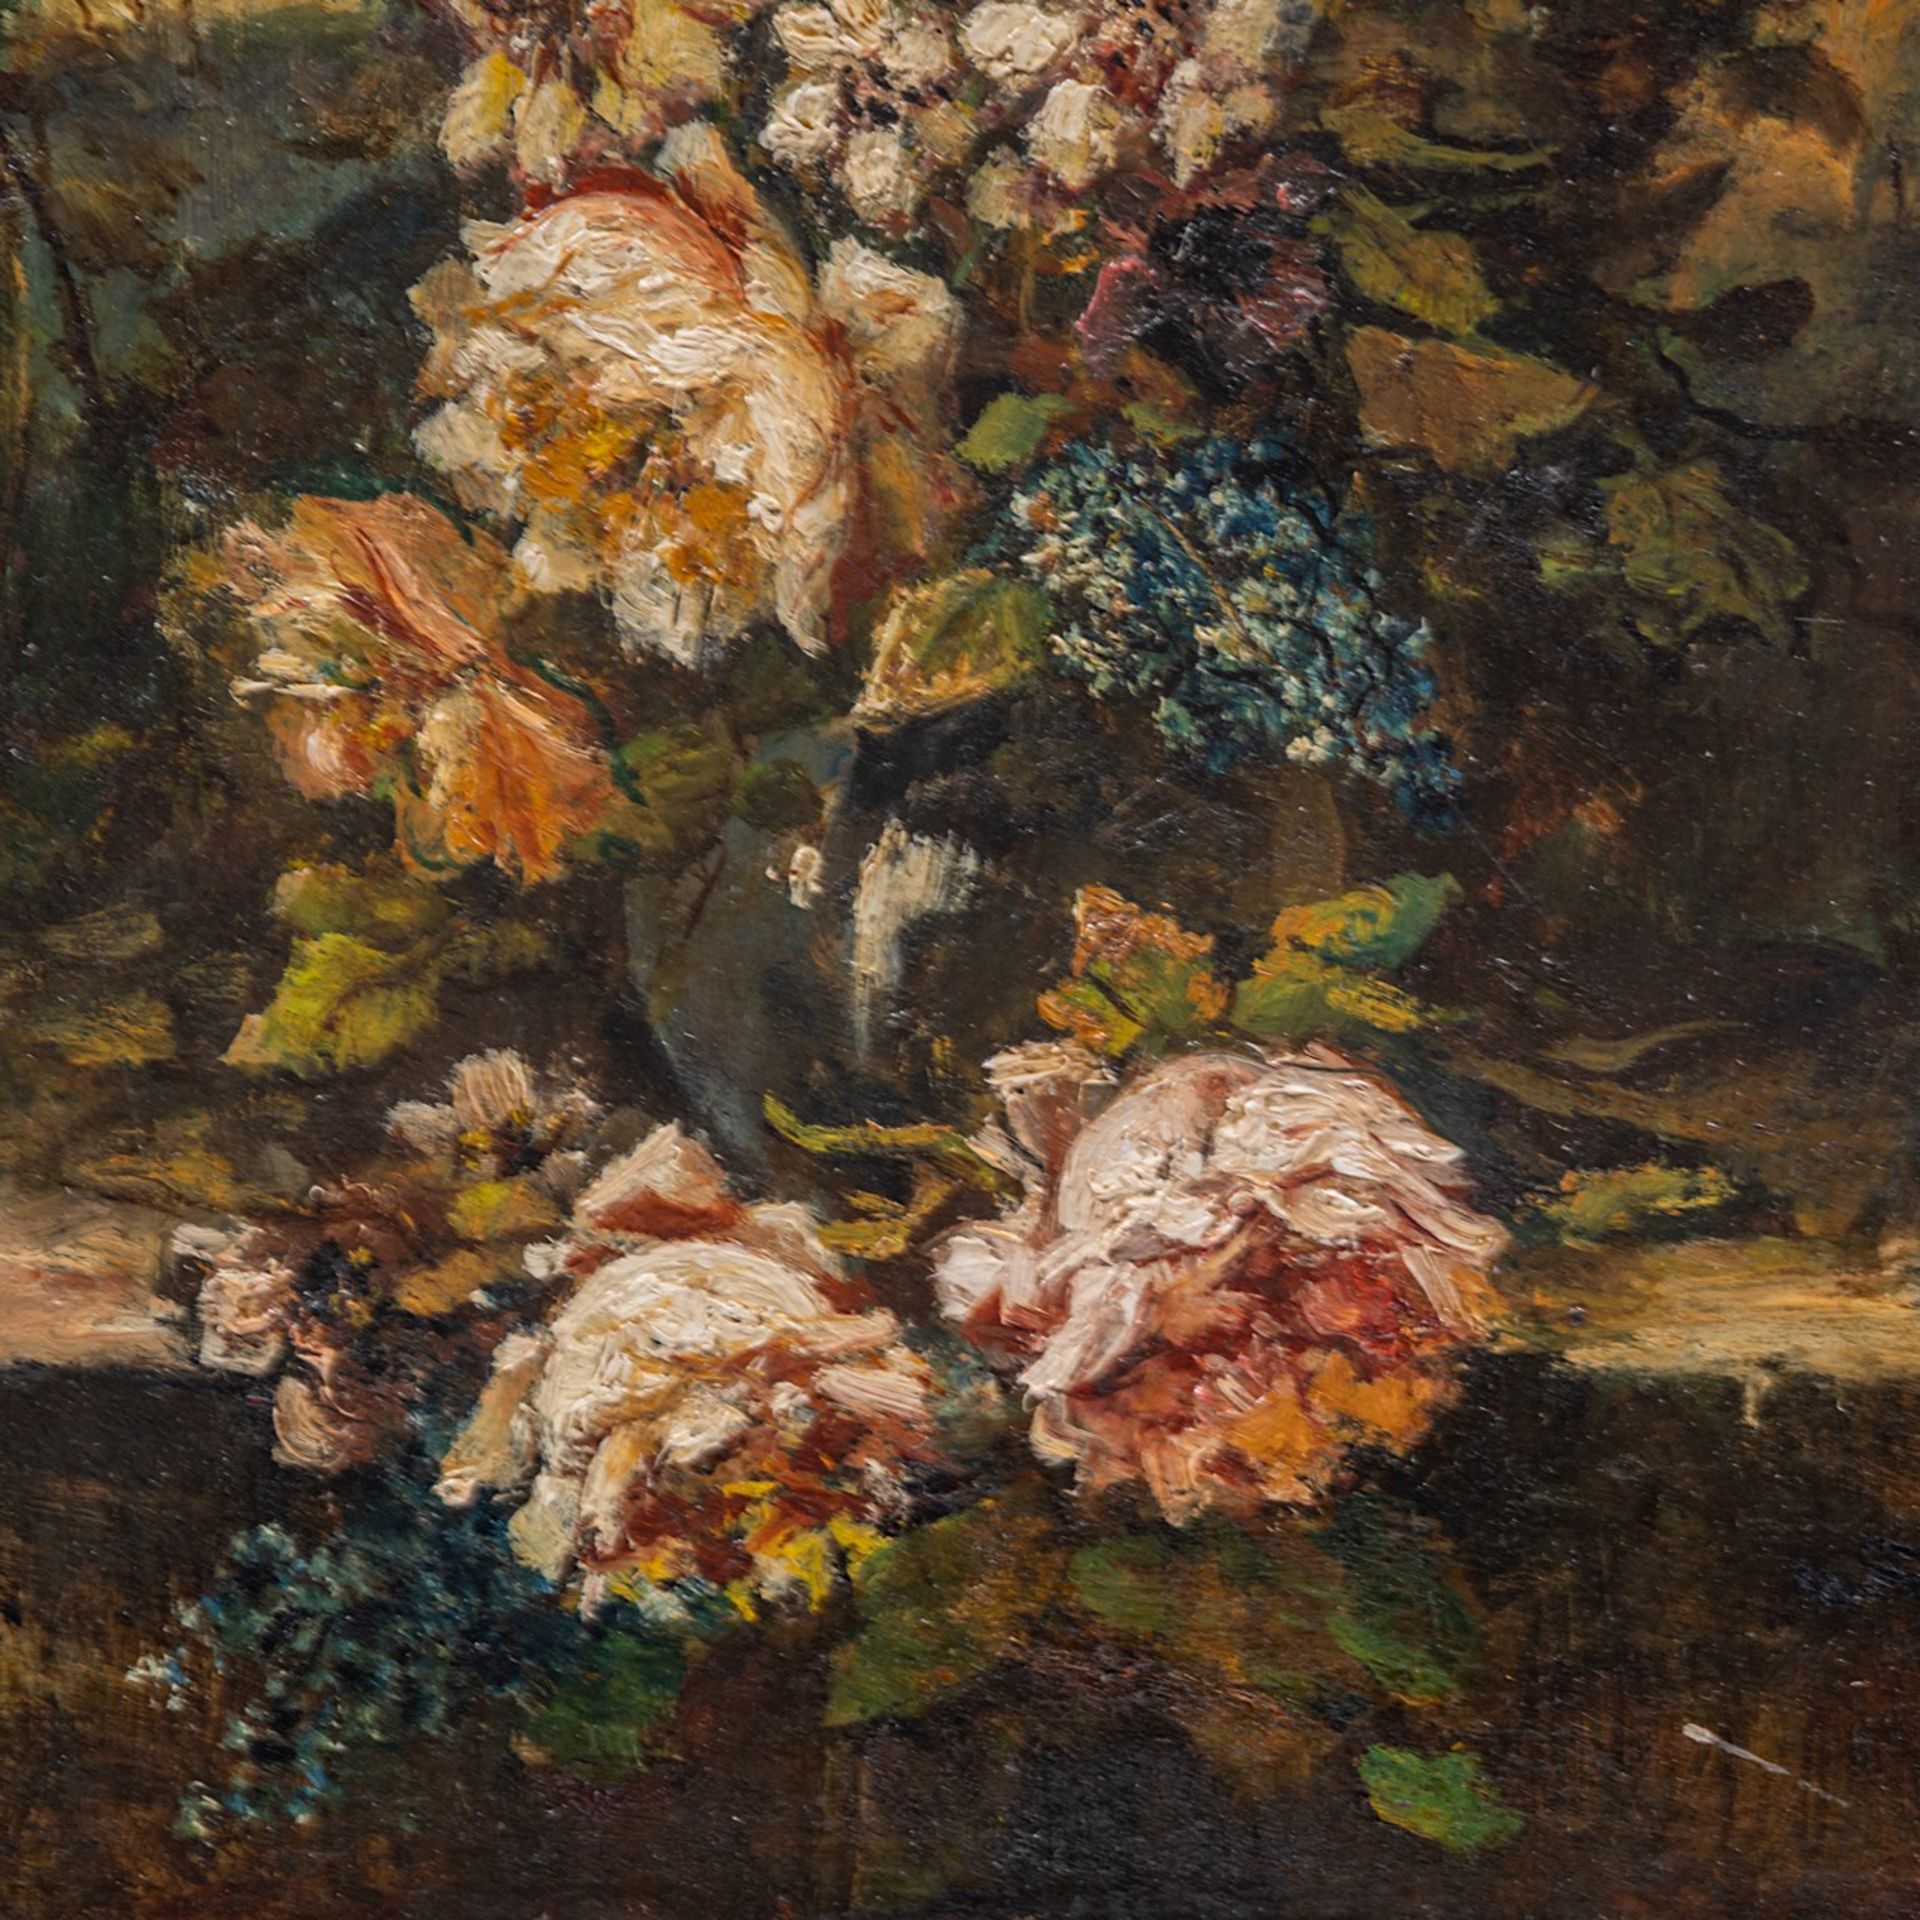 Narcisse Diaz de la Pena (1807-1876), flower still life, oil on mahogany 36 x 30 cm. (14.1 x 11.8 in - Image 5 of 5